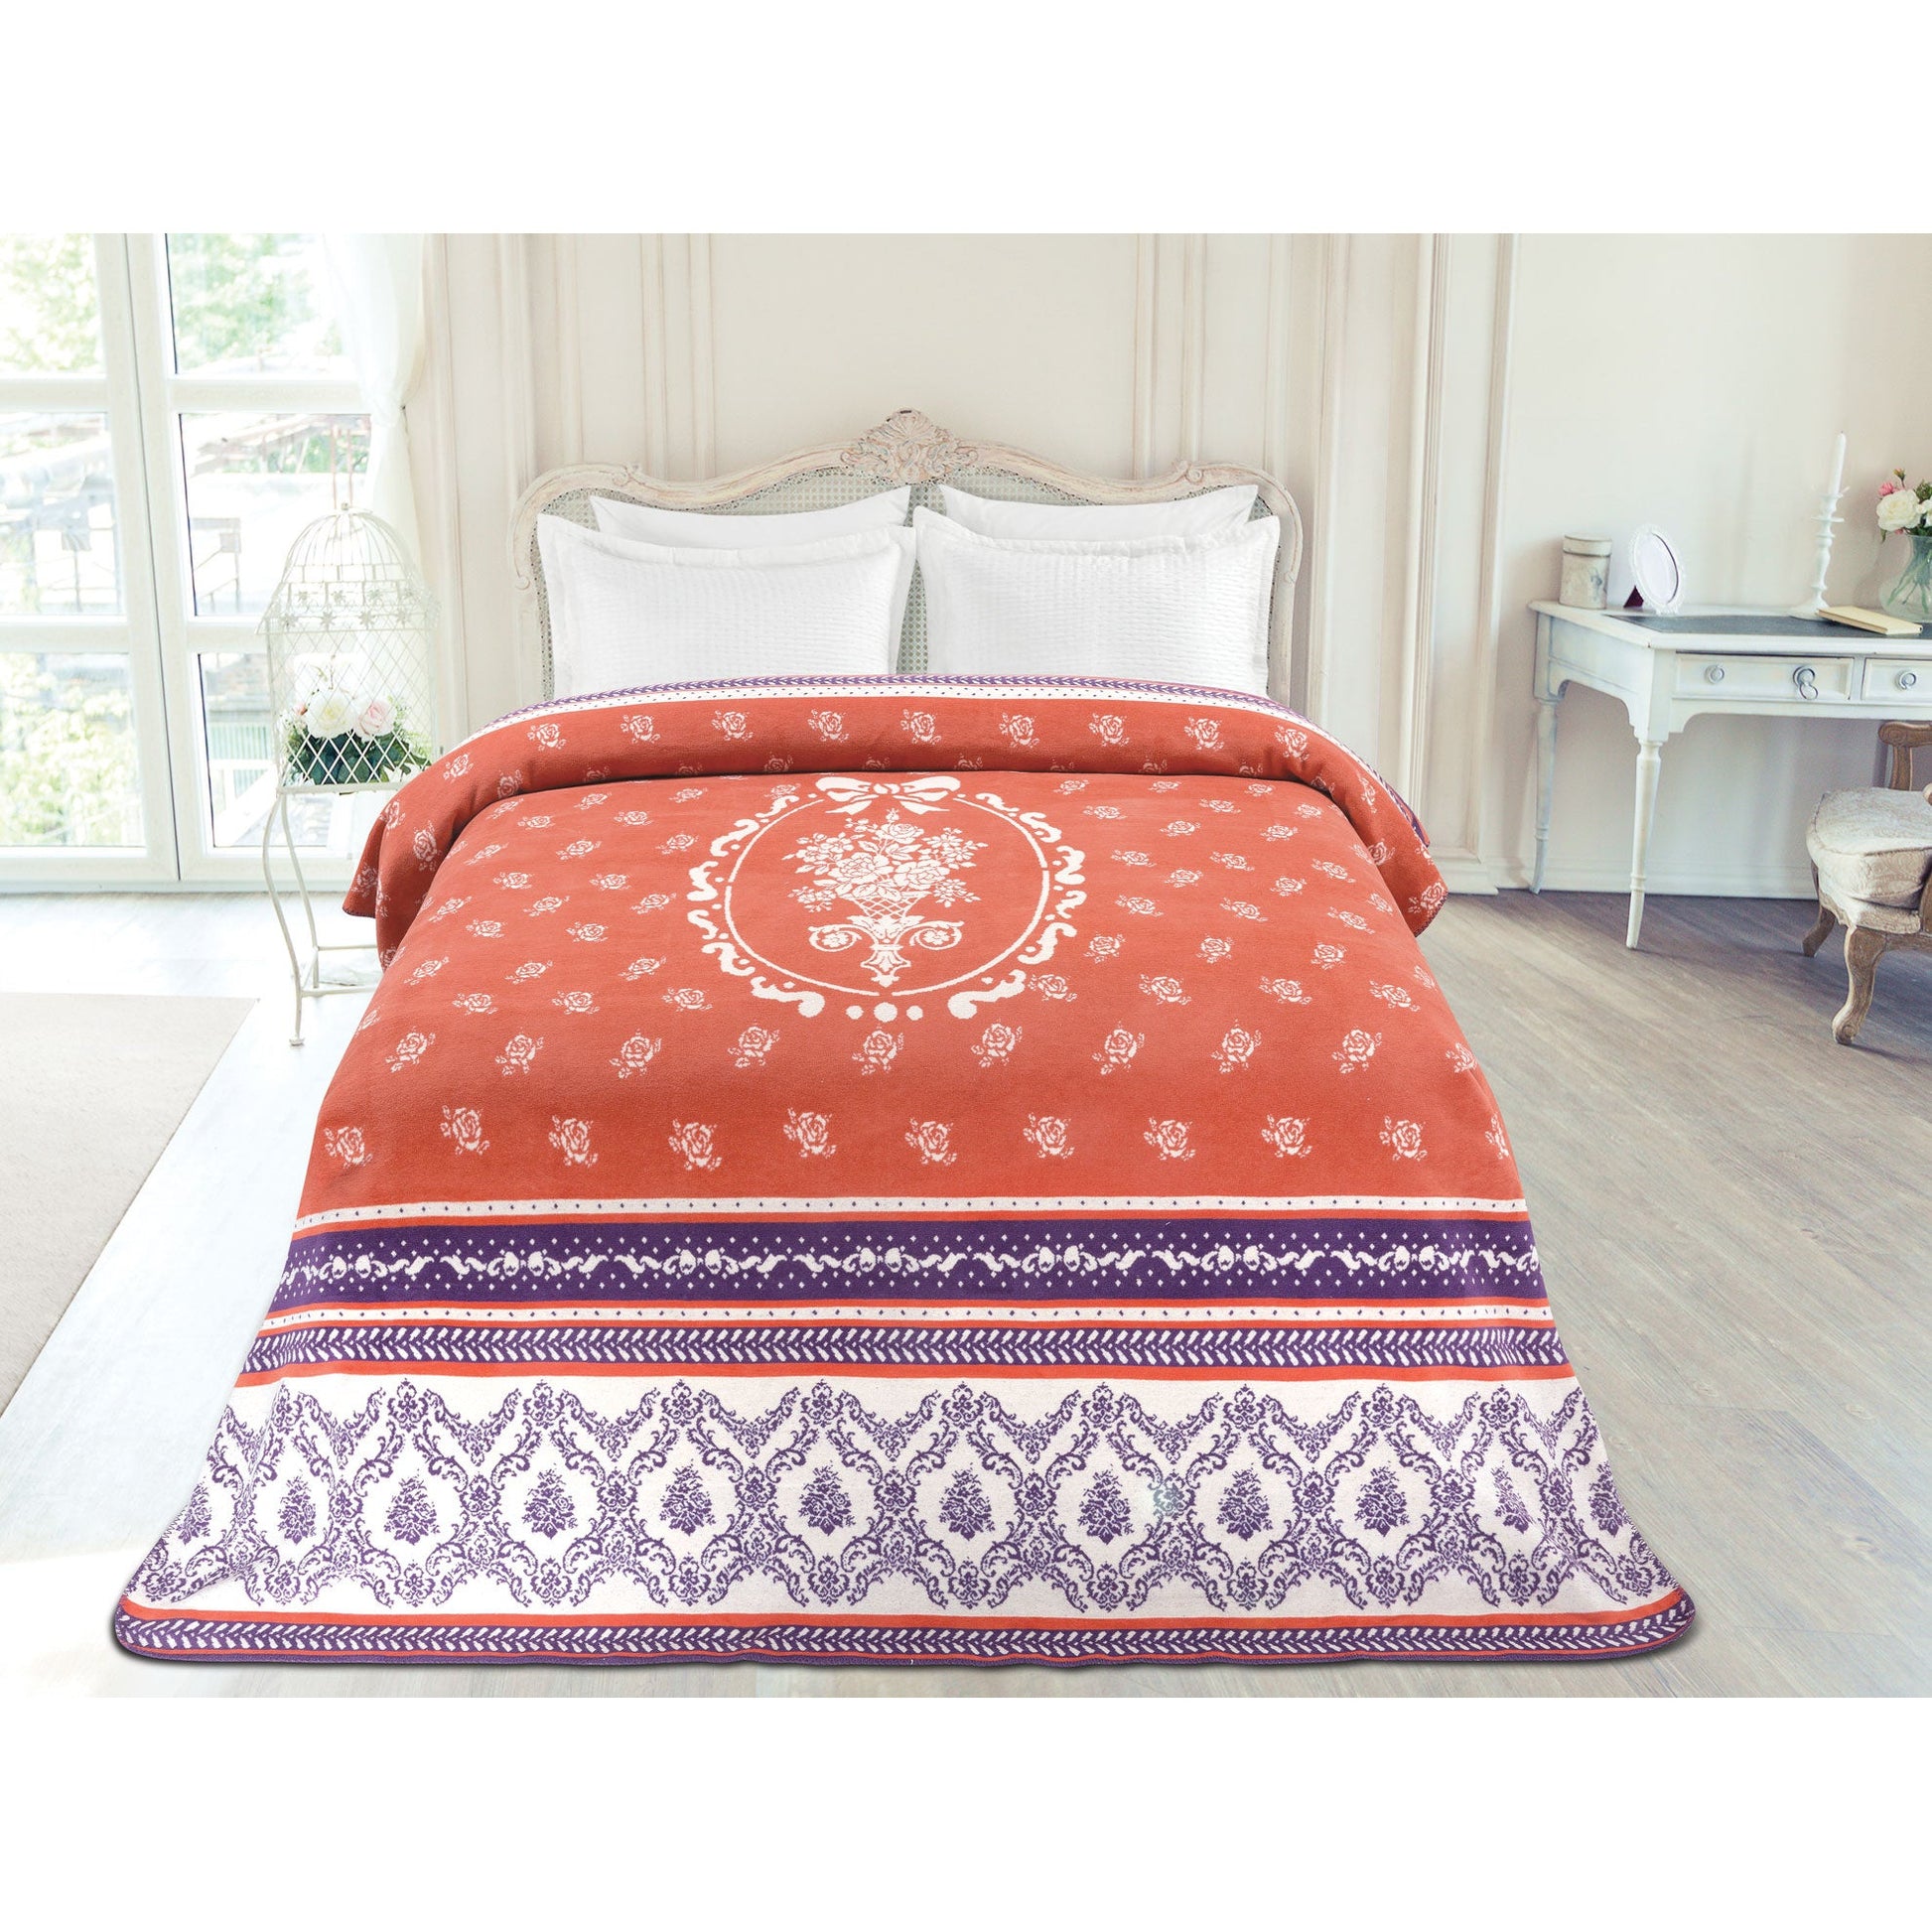 Madame Coco - Jacquard Cotton Blanket design 1